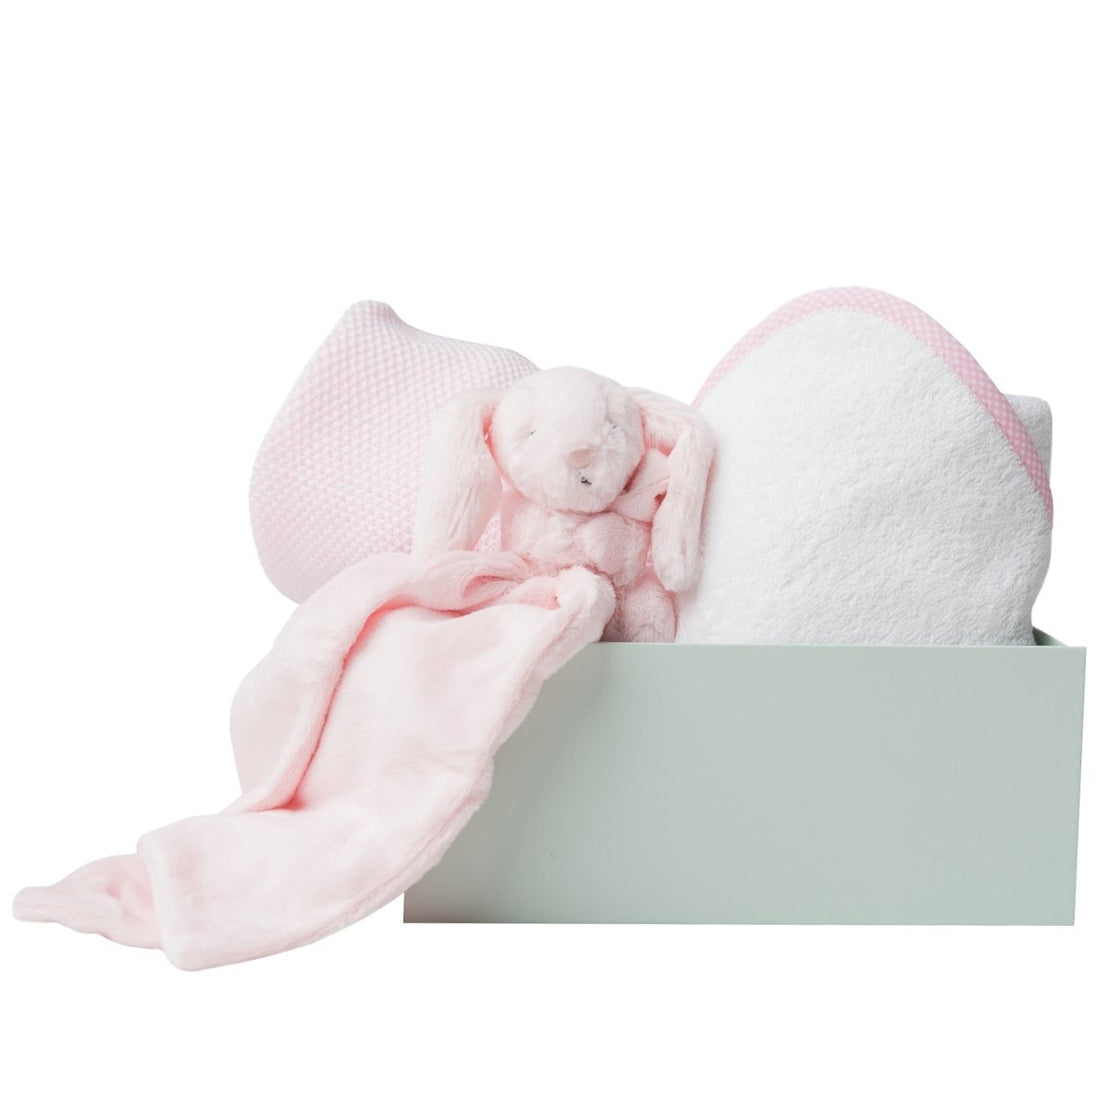 Personalised Baby Shower Gift Set - Pink - LOVINGLY SIGNED (HK)